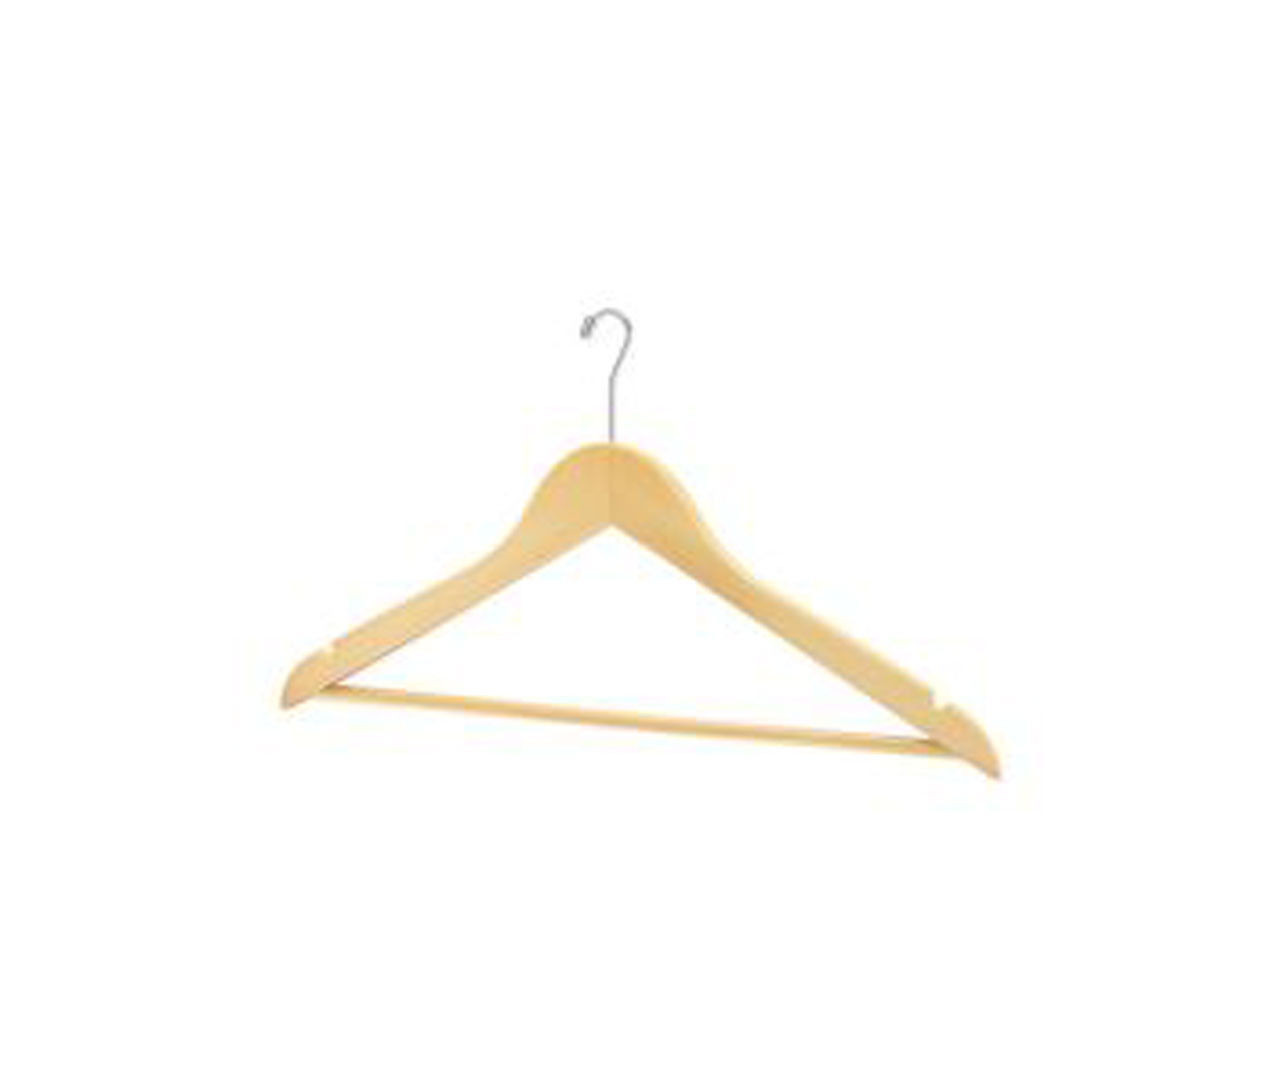 Small Hook Suit Hangers With Slack Bars - Bulk Case of 100 Pieces